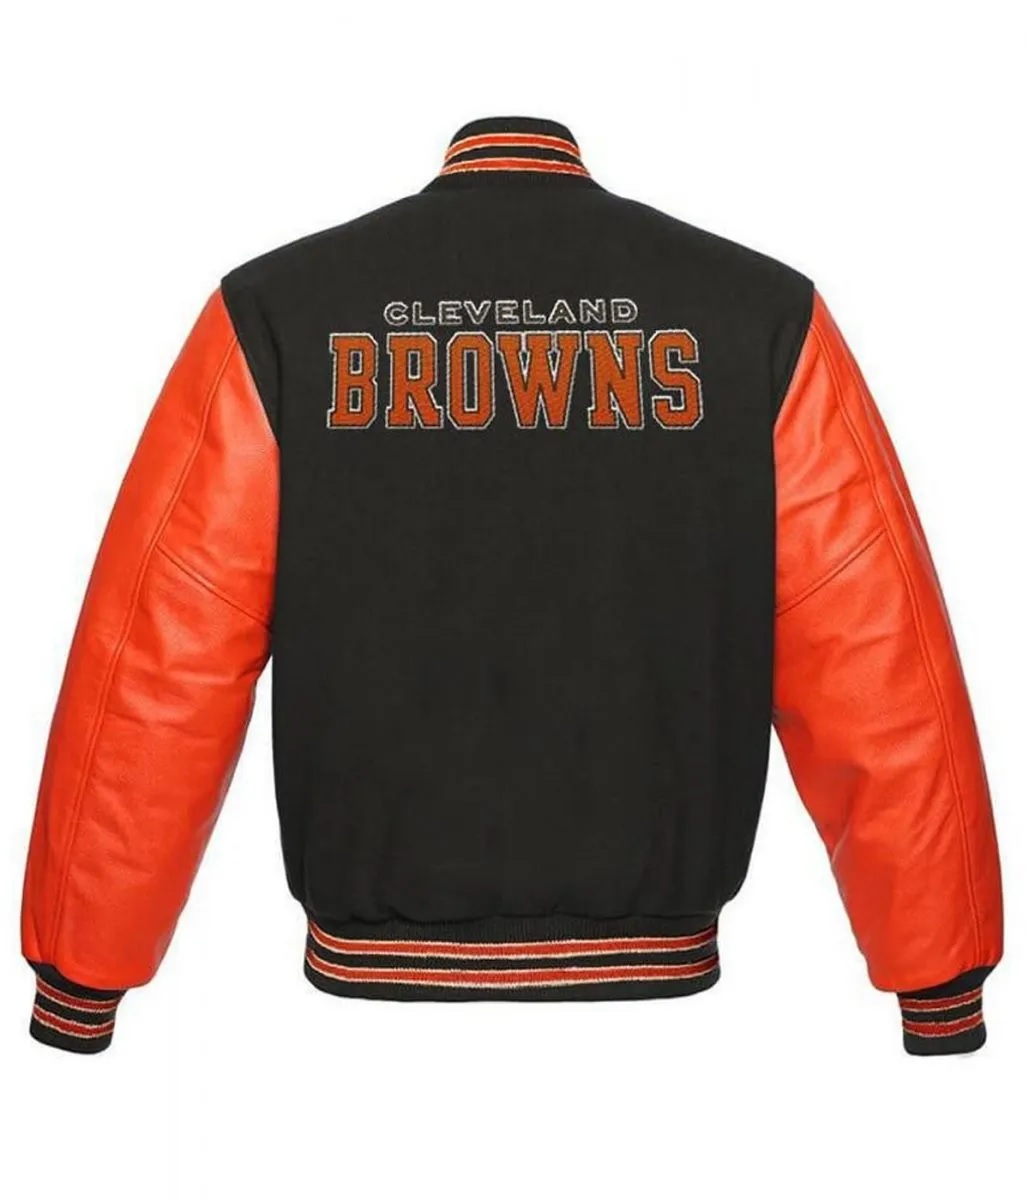 Cleveland Browns Grey and Orange Jacket